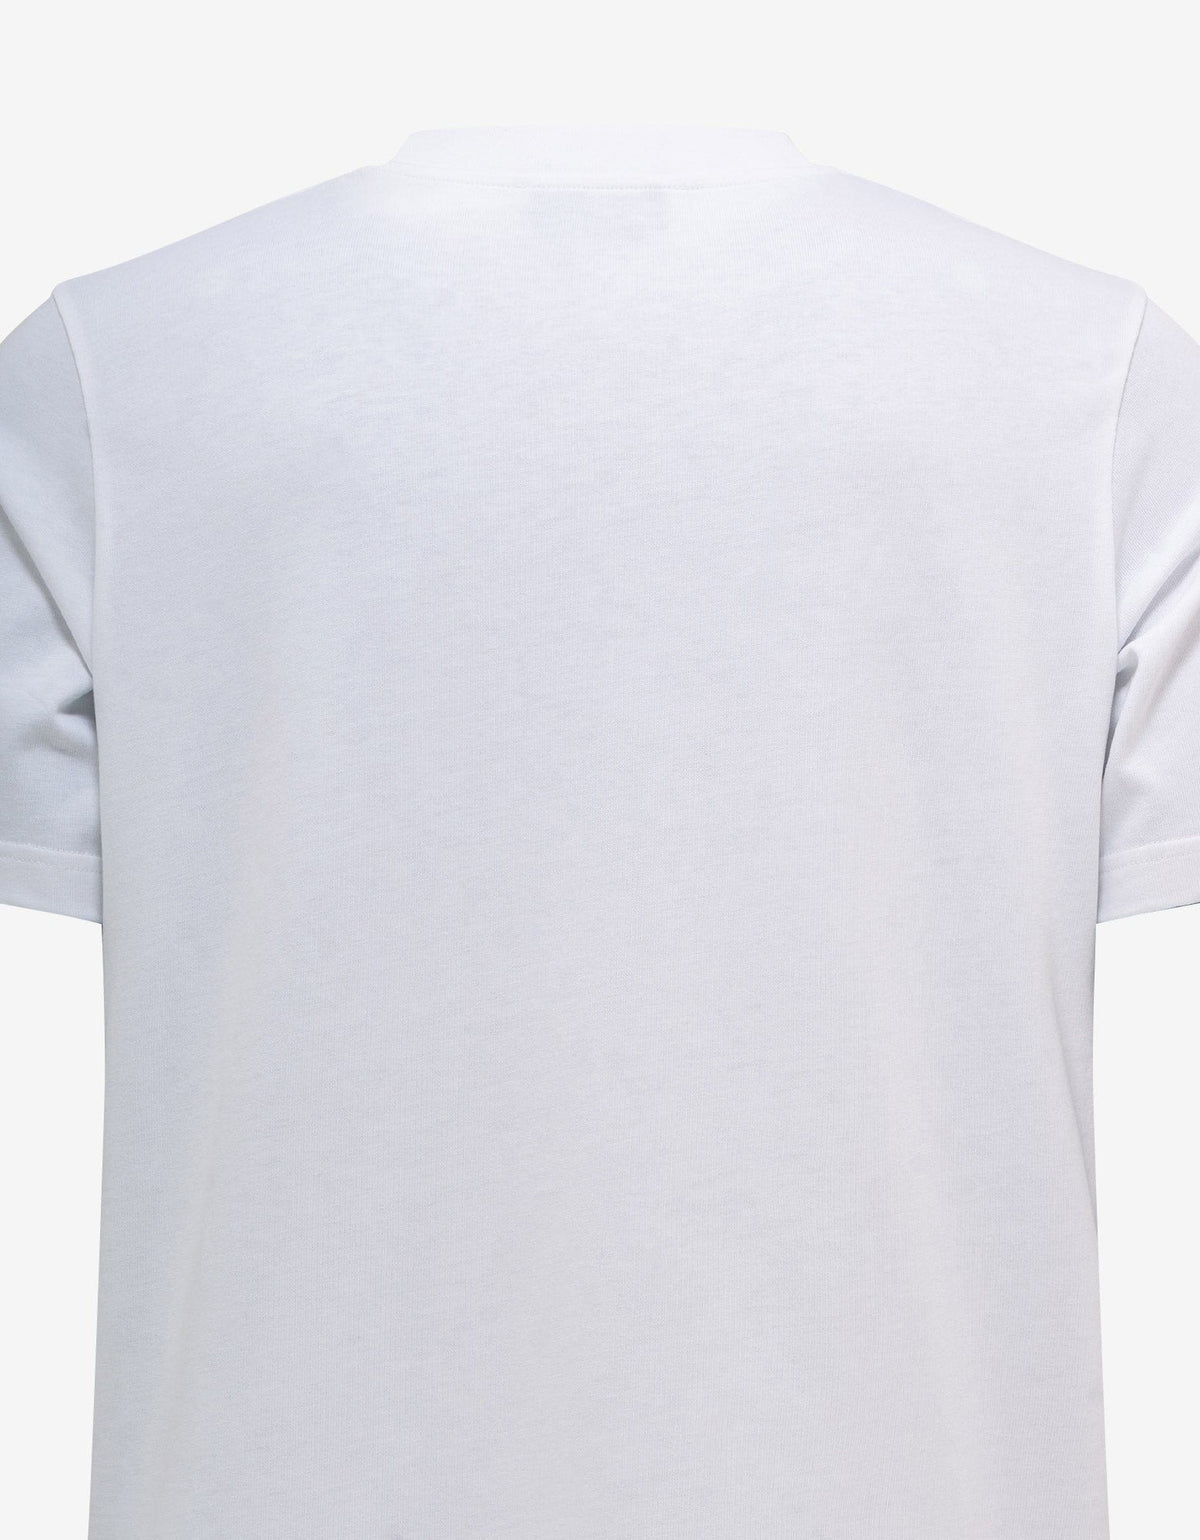 Casablanca White La Joueuse Print T-Shirt